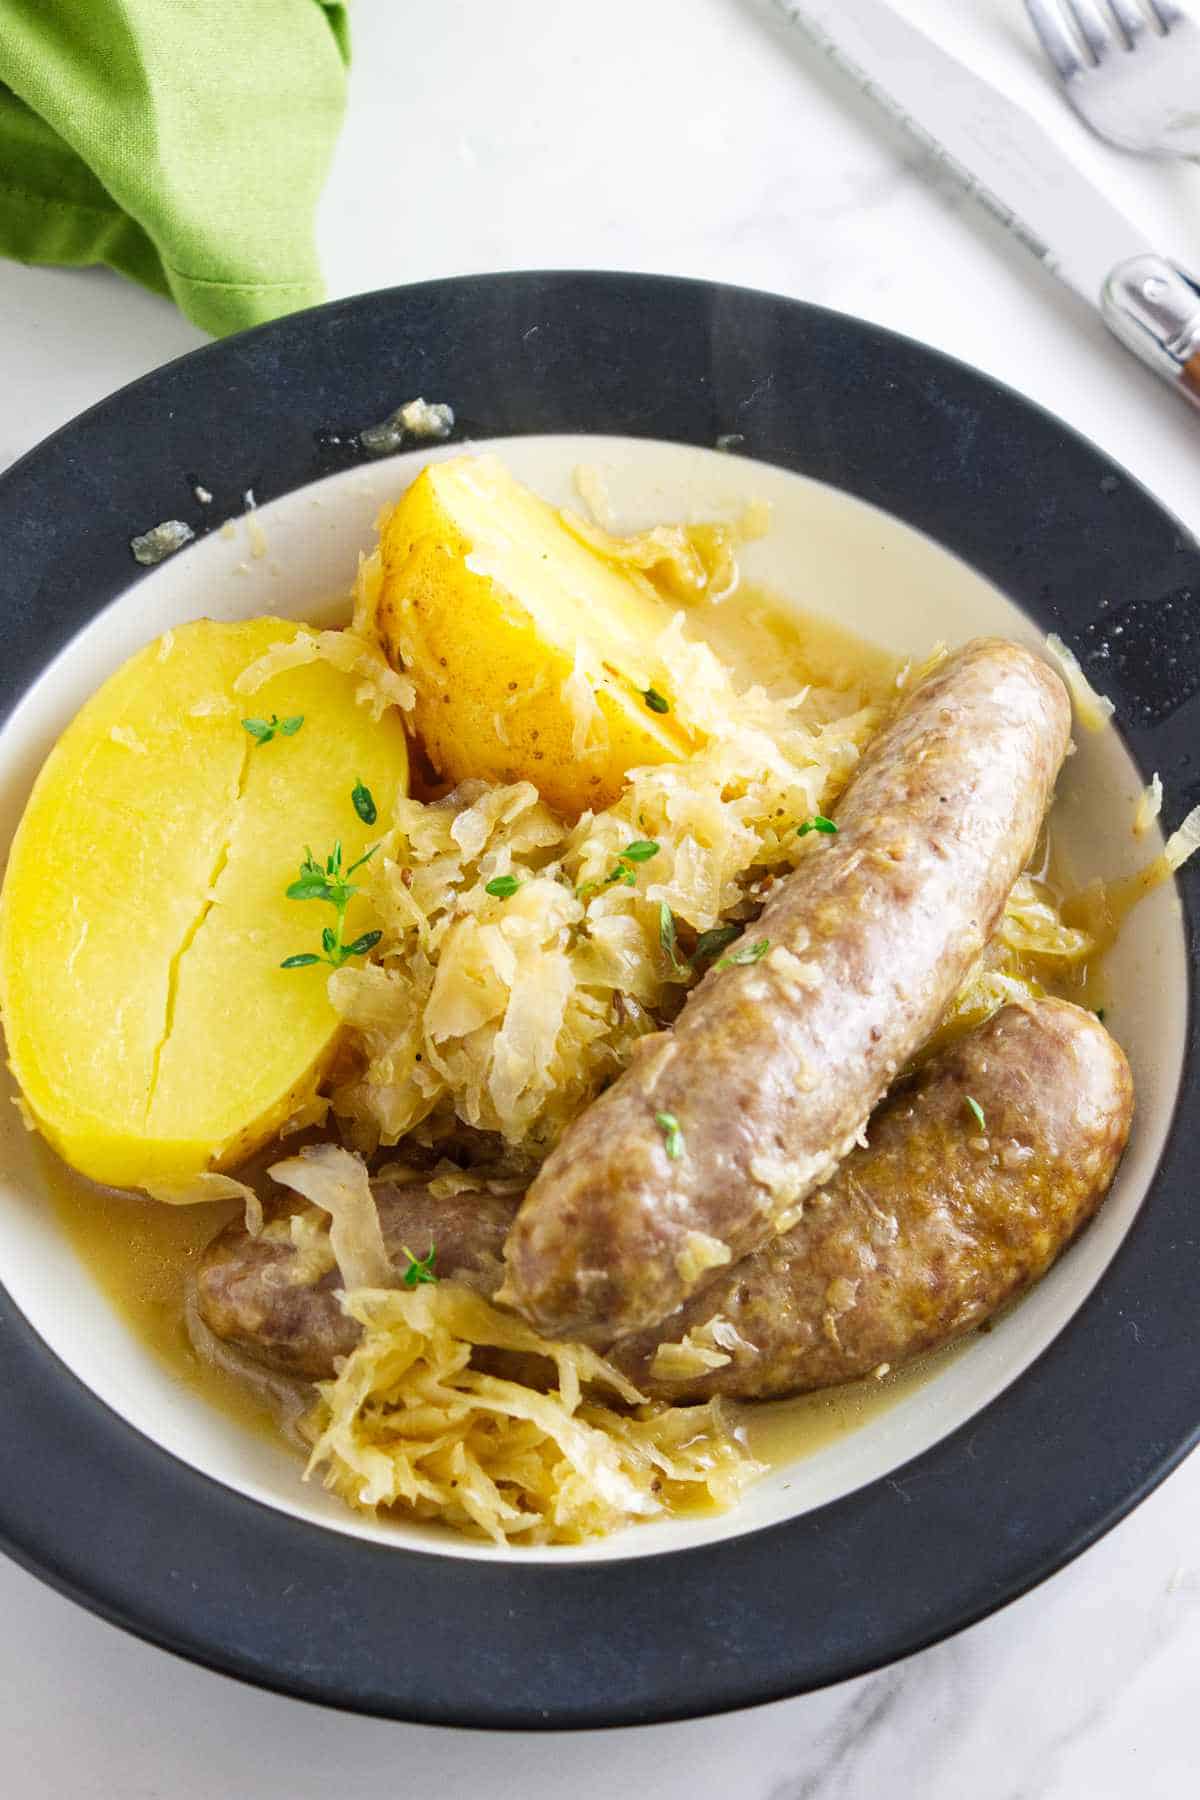 bowl holding a serving of bratwurst, potatoes, and sauerkraut.